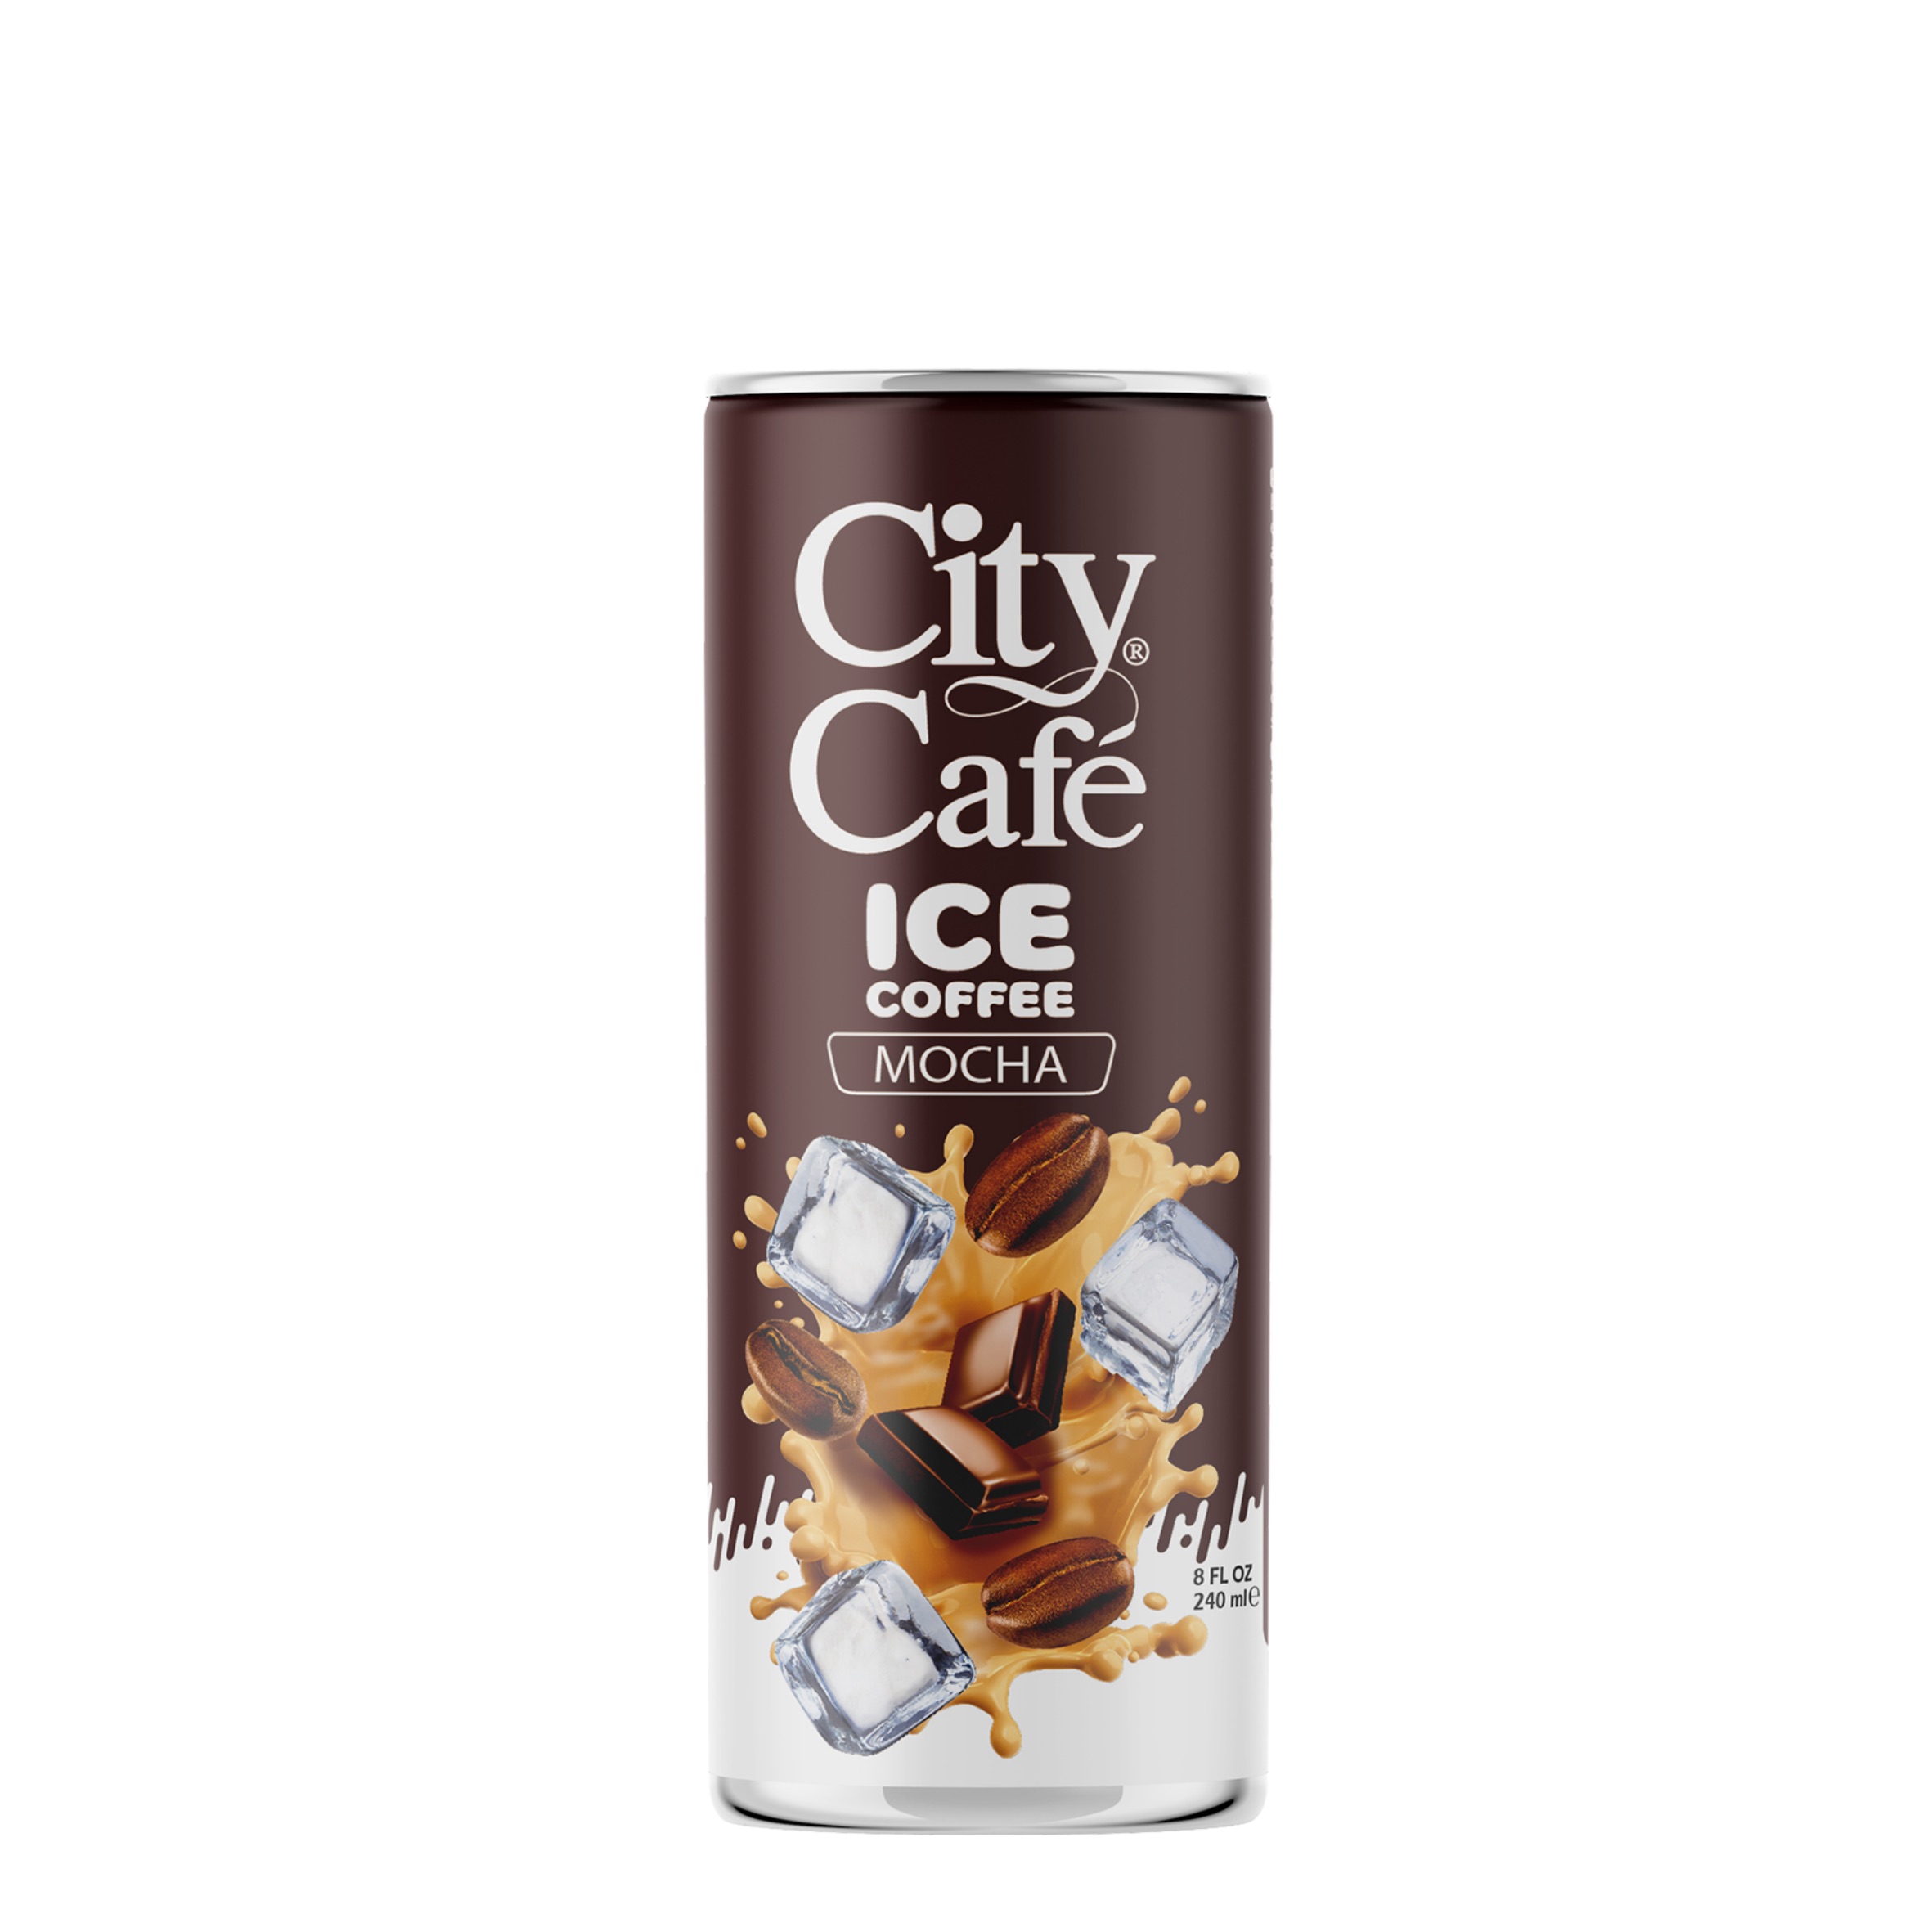 City café Ice Coffee - Mocha 